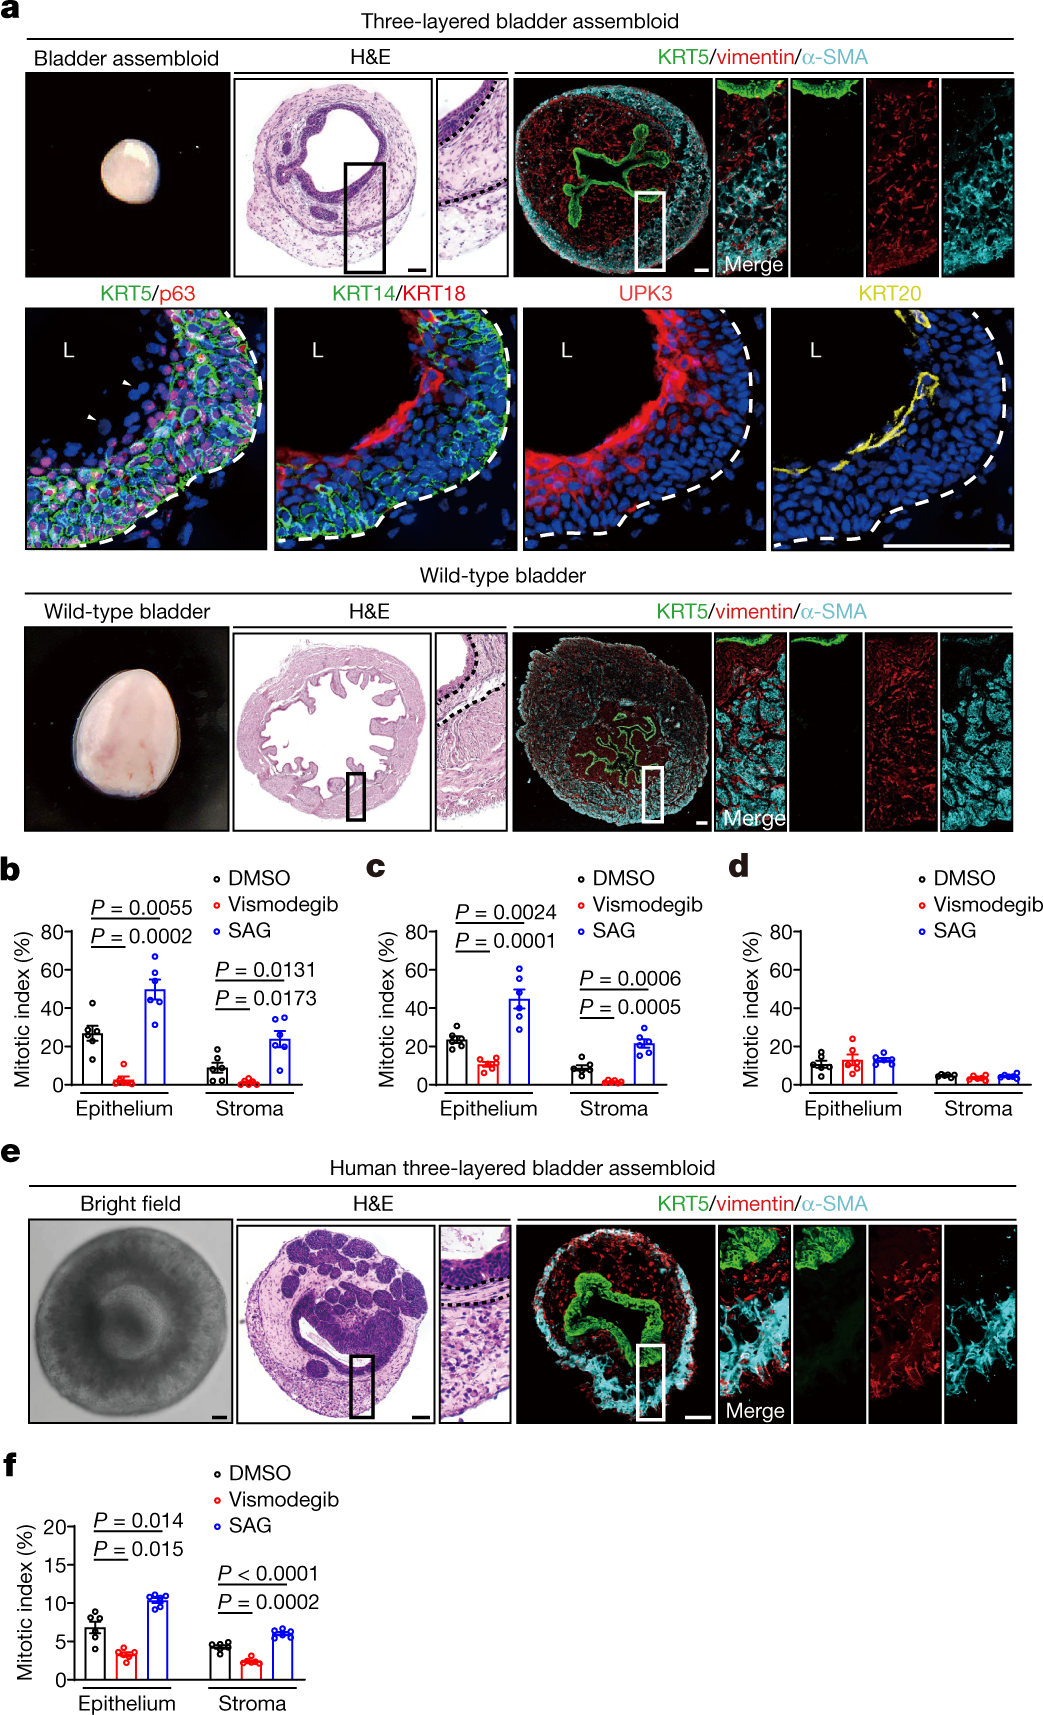 Creation of bladder assembloids mimicking tissue regeneration and cancer |  Nature